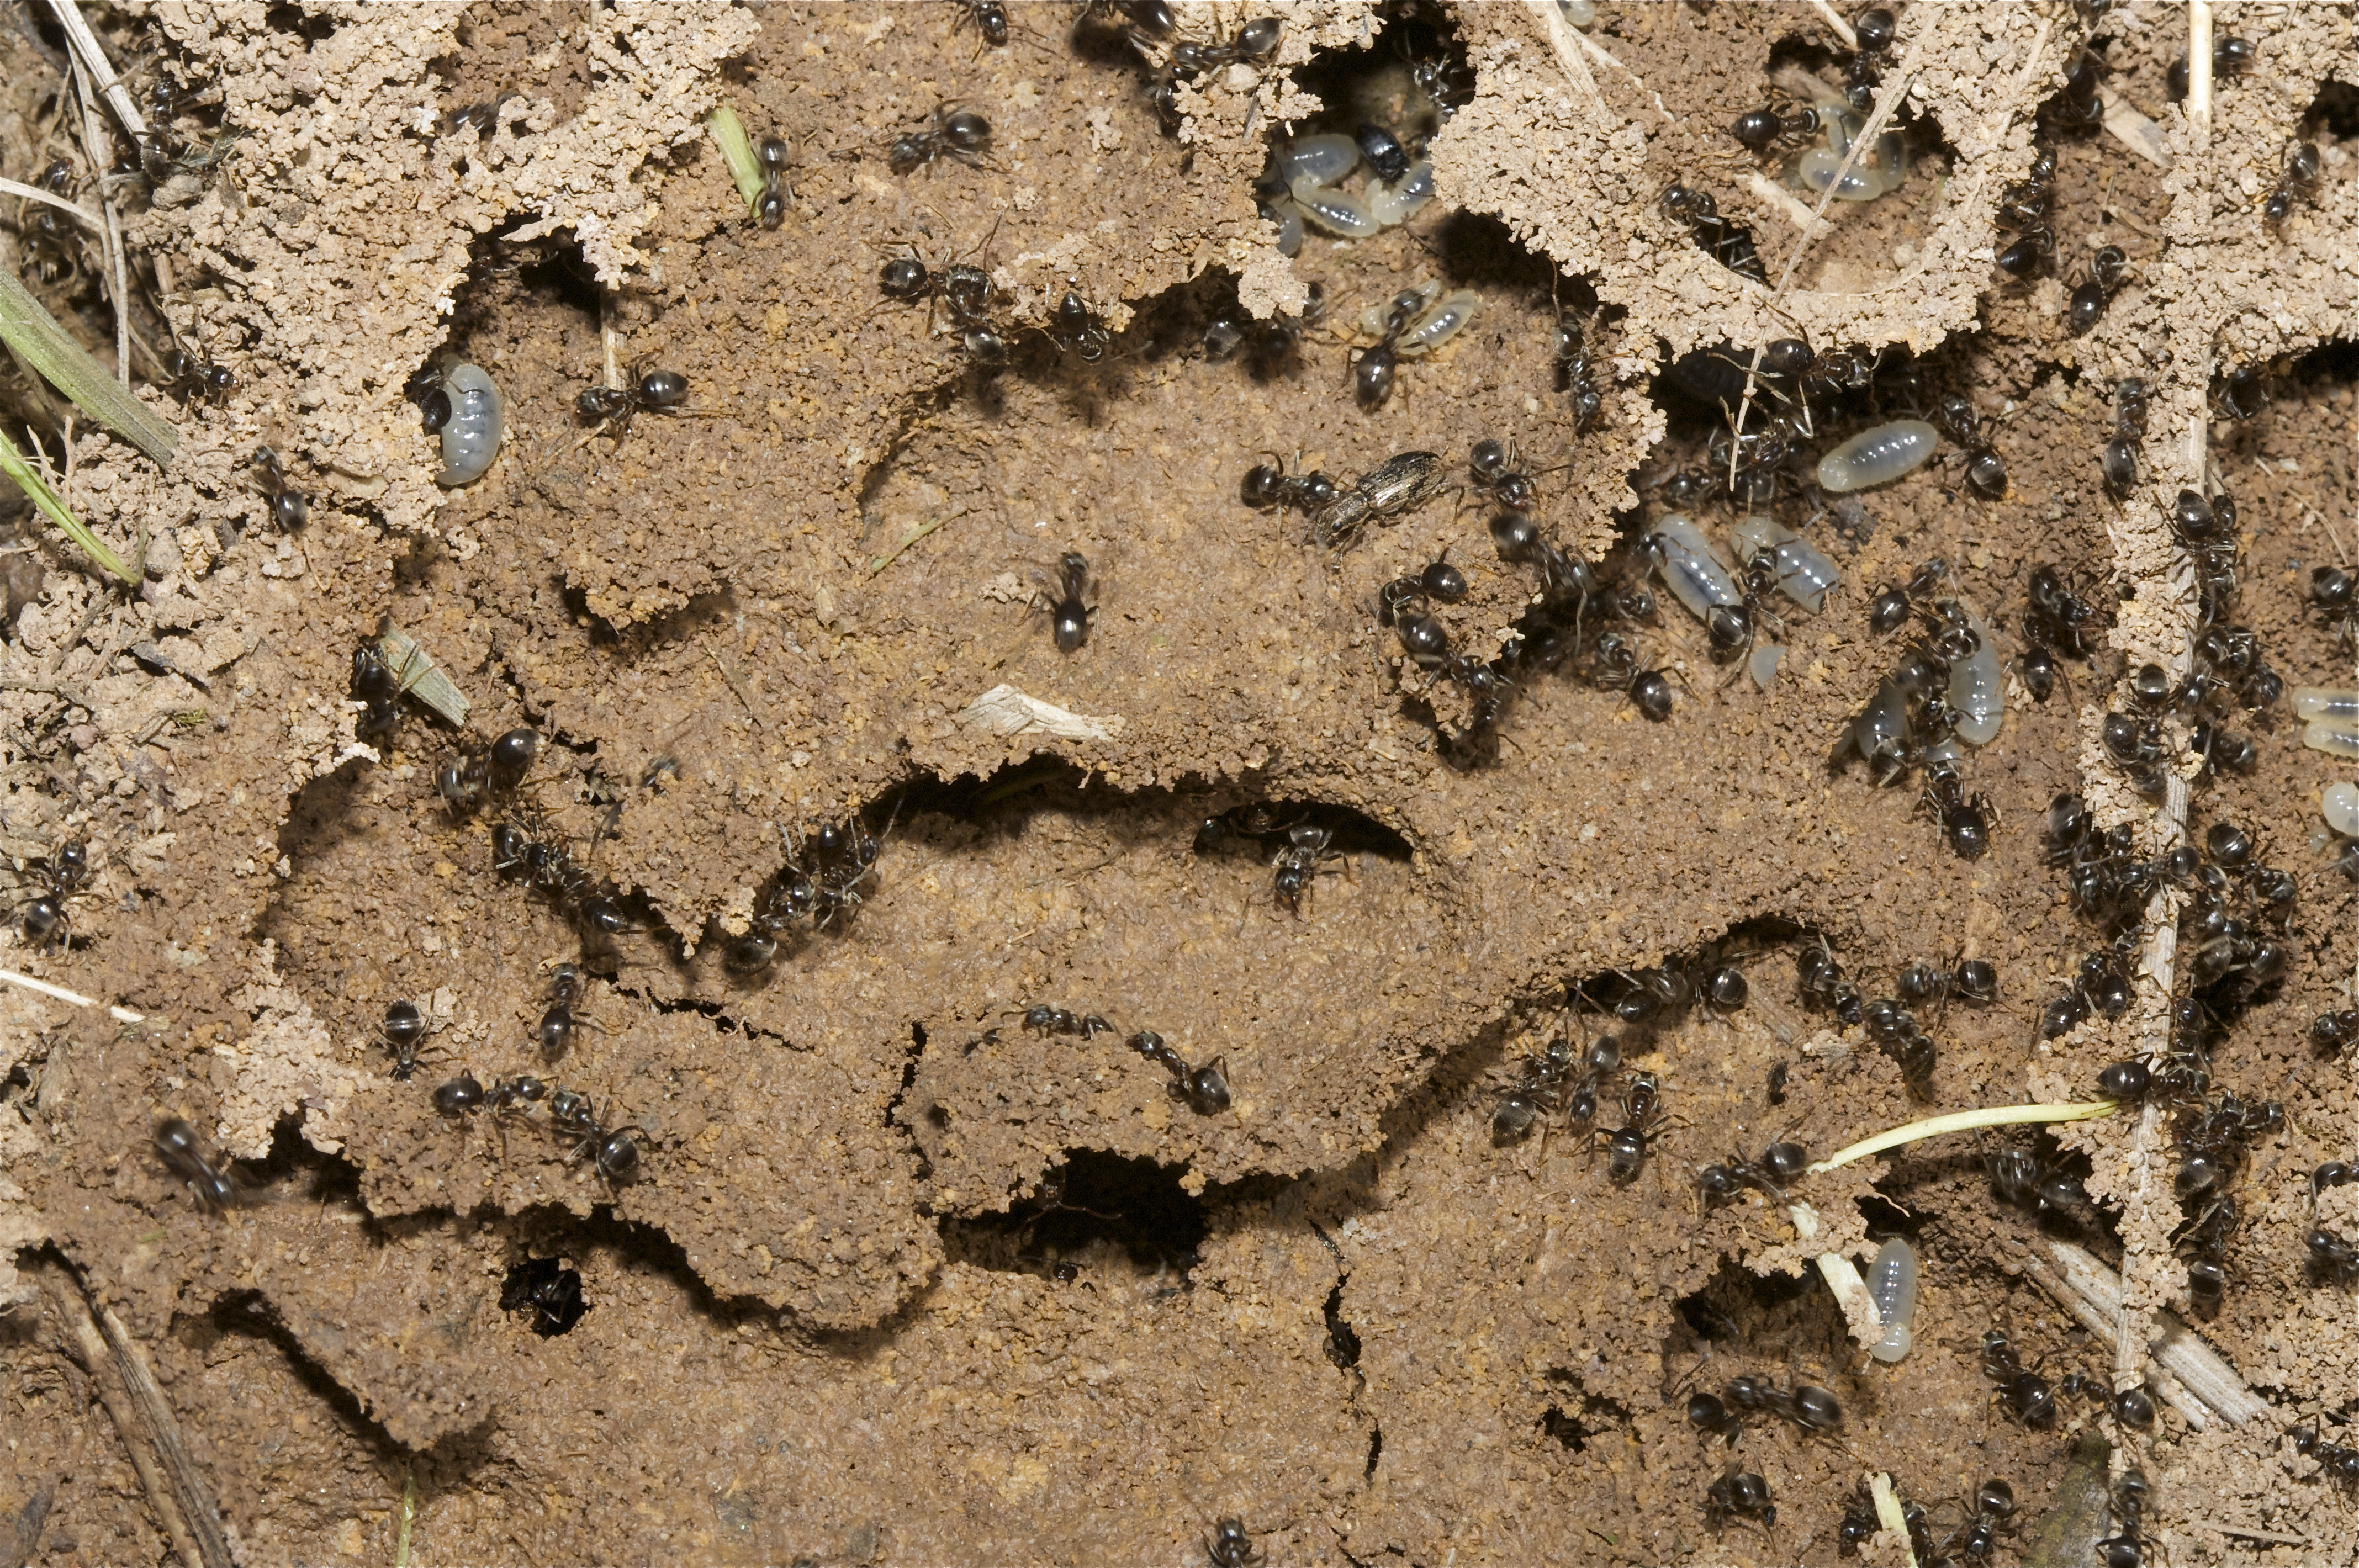 Ant species Formica (Serviformica) fusca - ANTCUBE